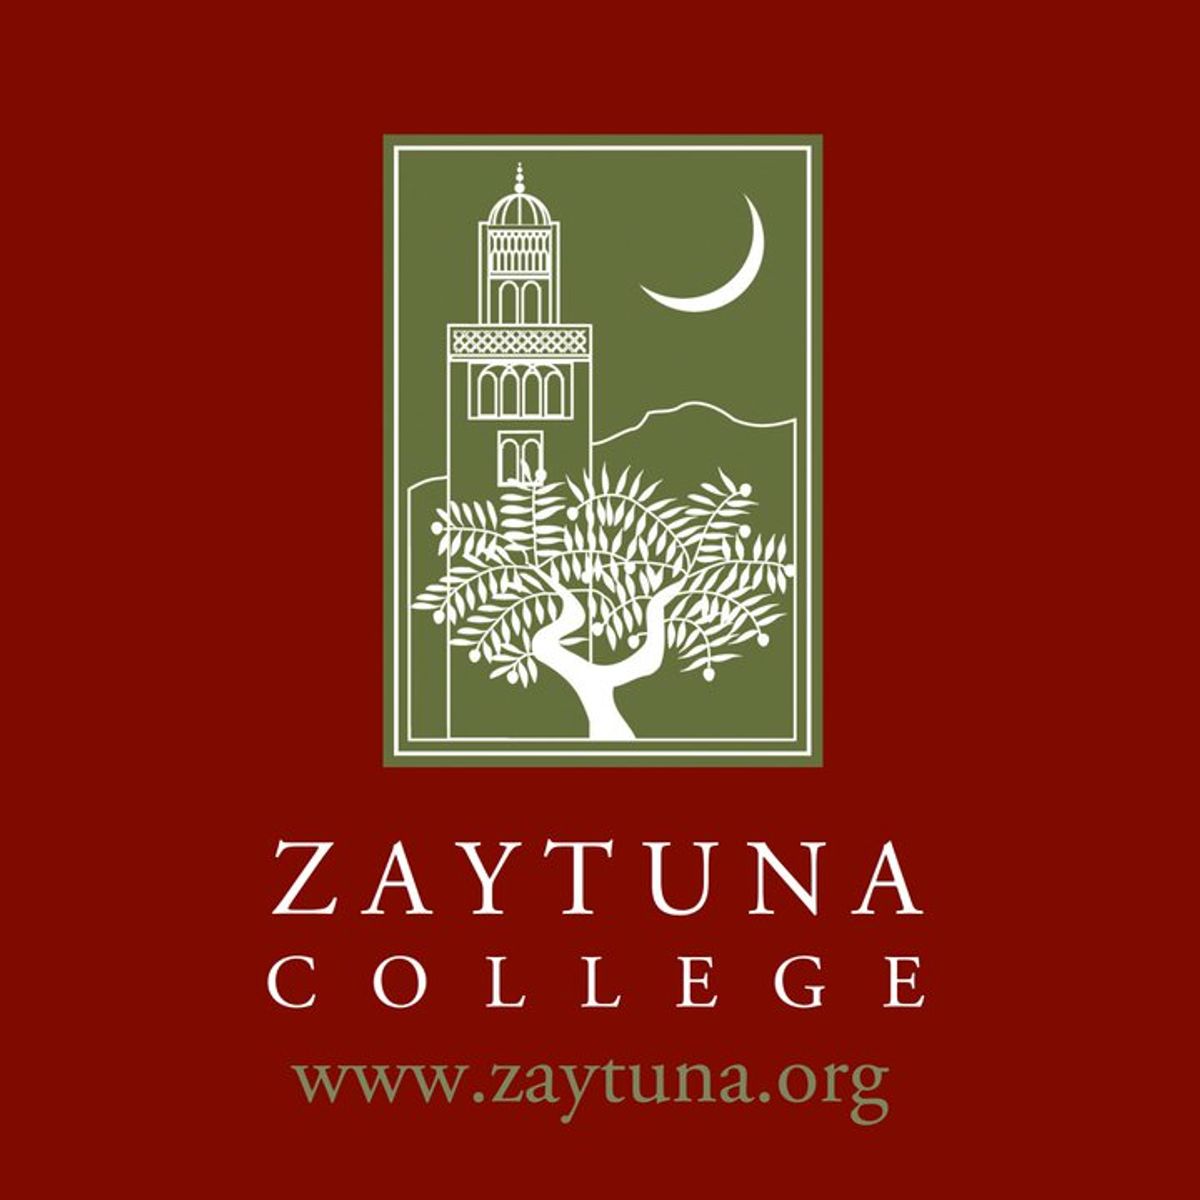    (Zaytuna College, Facebook)